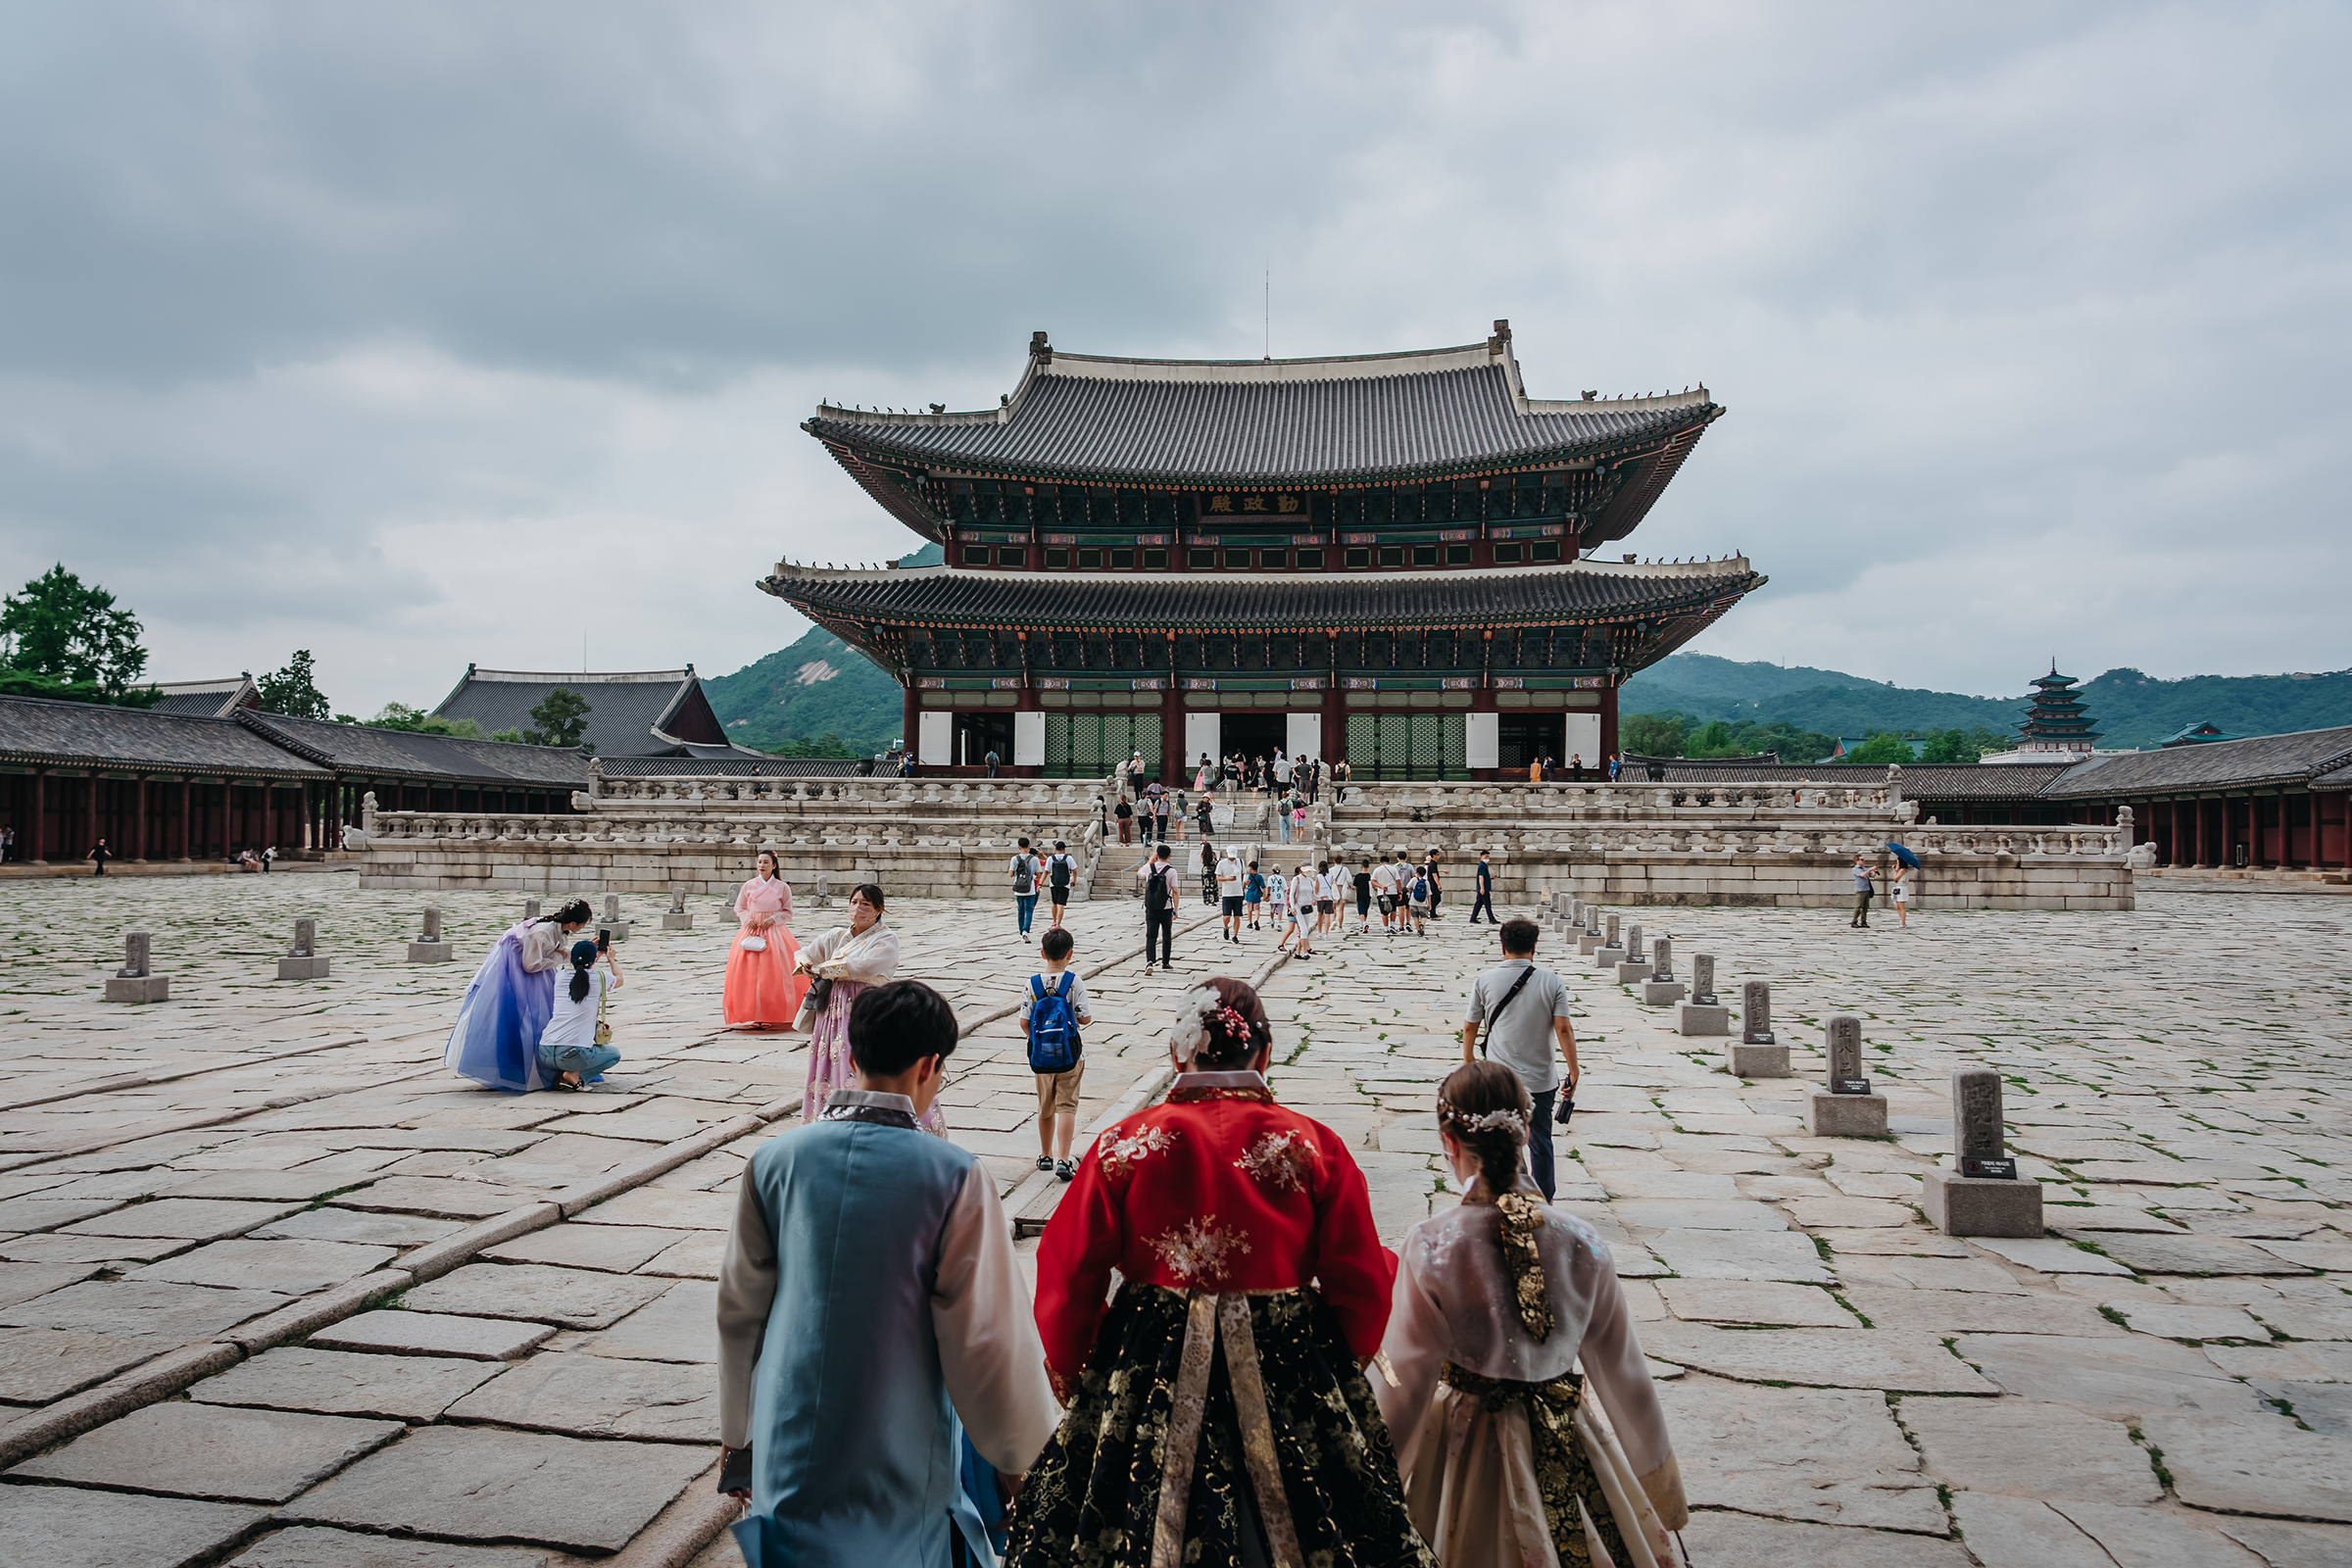 Gyeongbokgung Palace in Seoul, Korea. (Jun Michael Park for TIME)